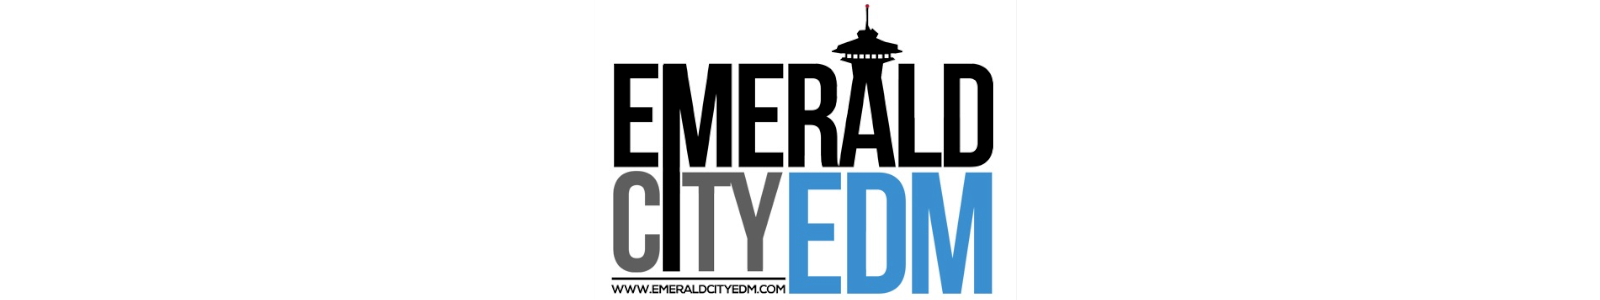 Emerald City EDM - Business Sponsor of The DJ Sessions